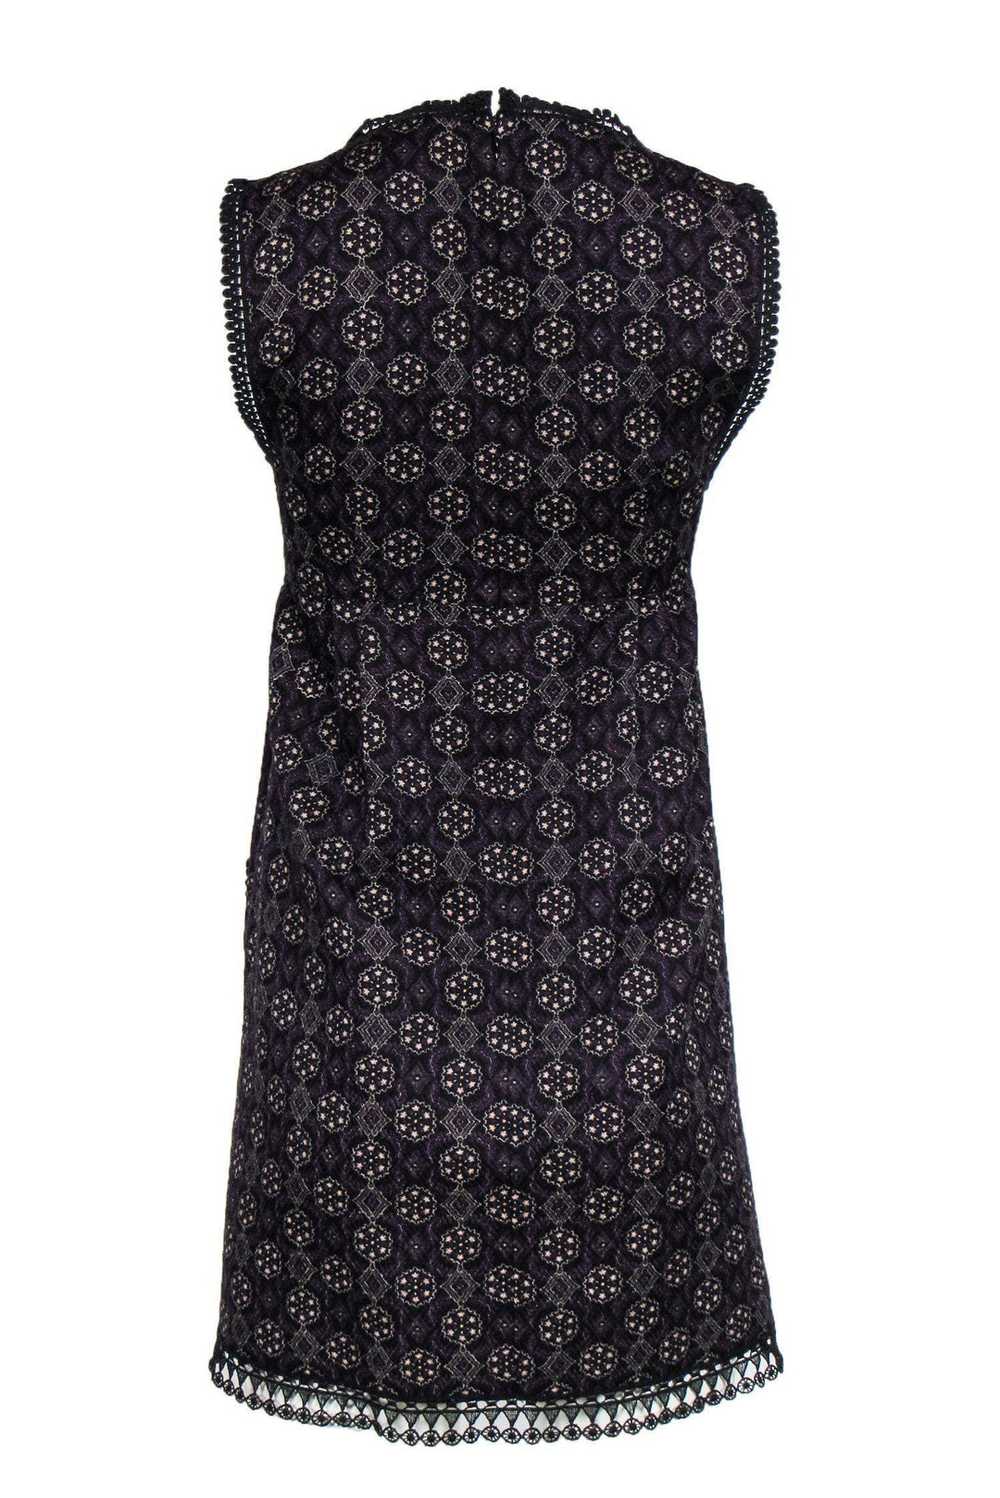 Anna Sui - Purple Printed Cotton & Silk Dress Sz 2 - image 3